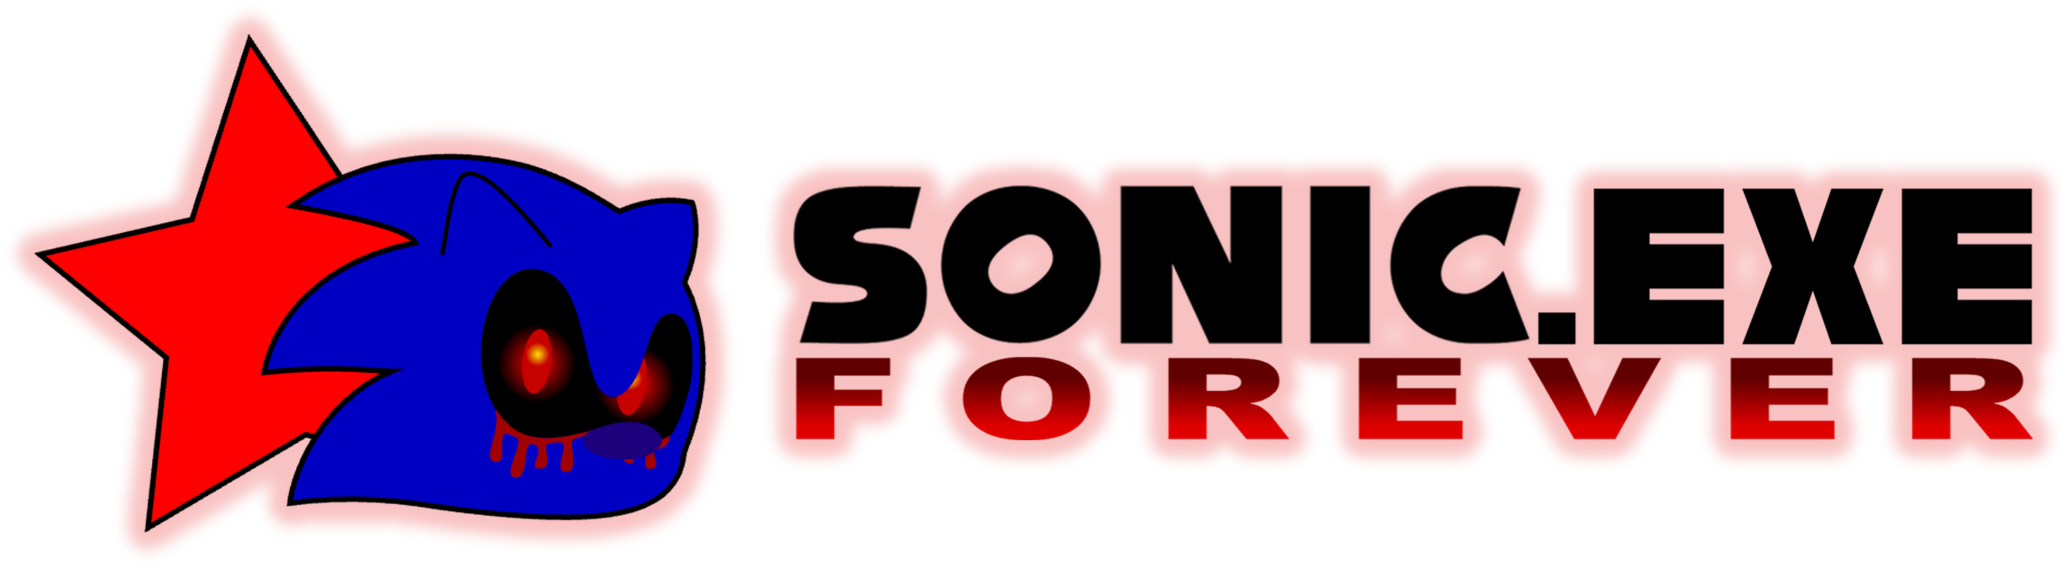 Sonic.EXE para Windows Download